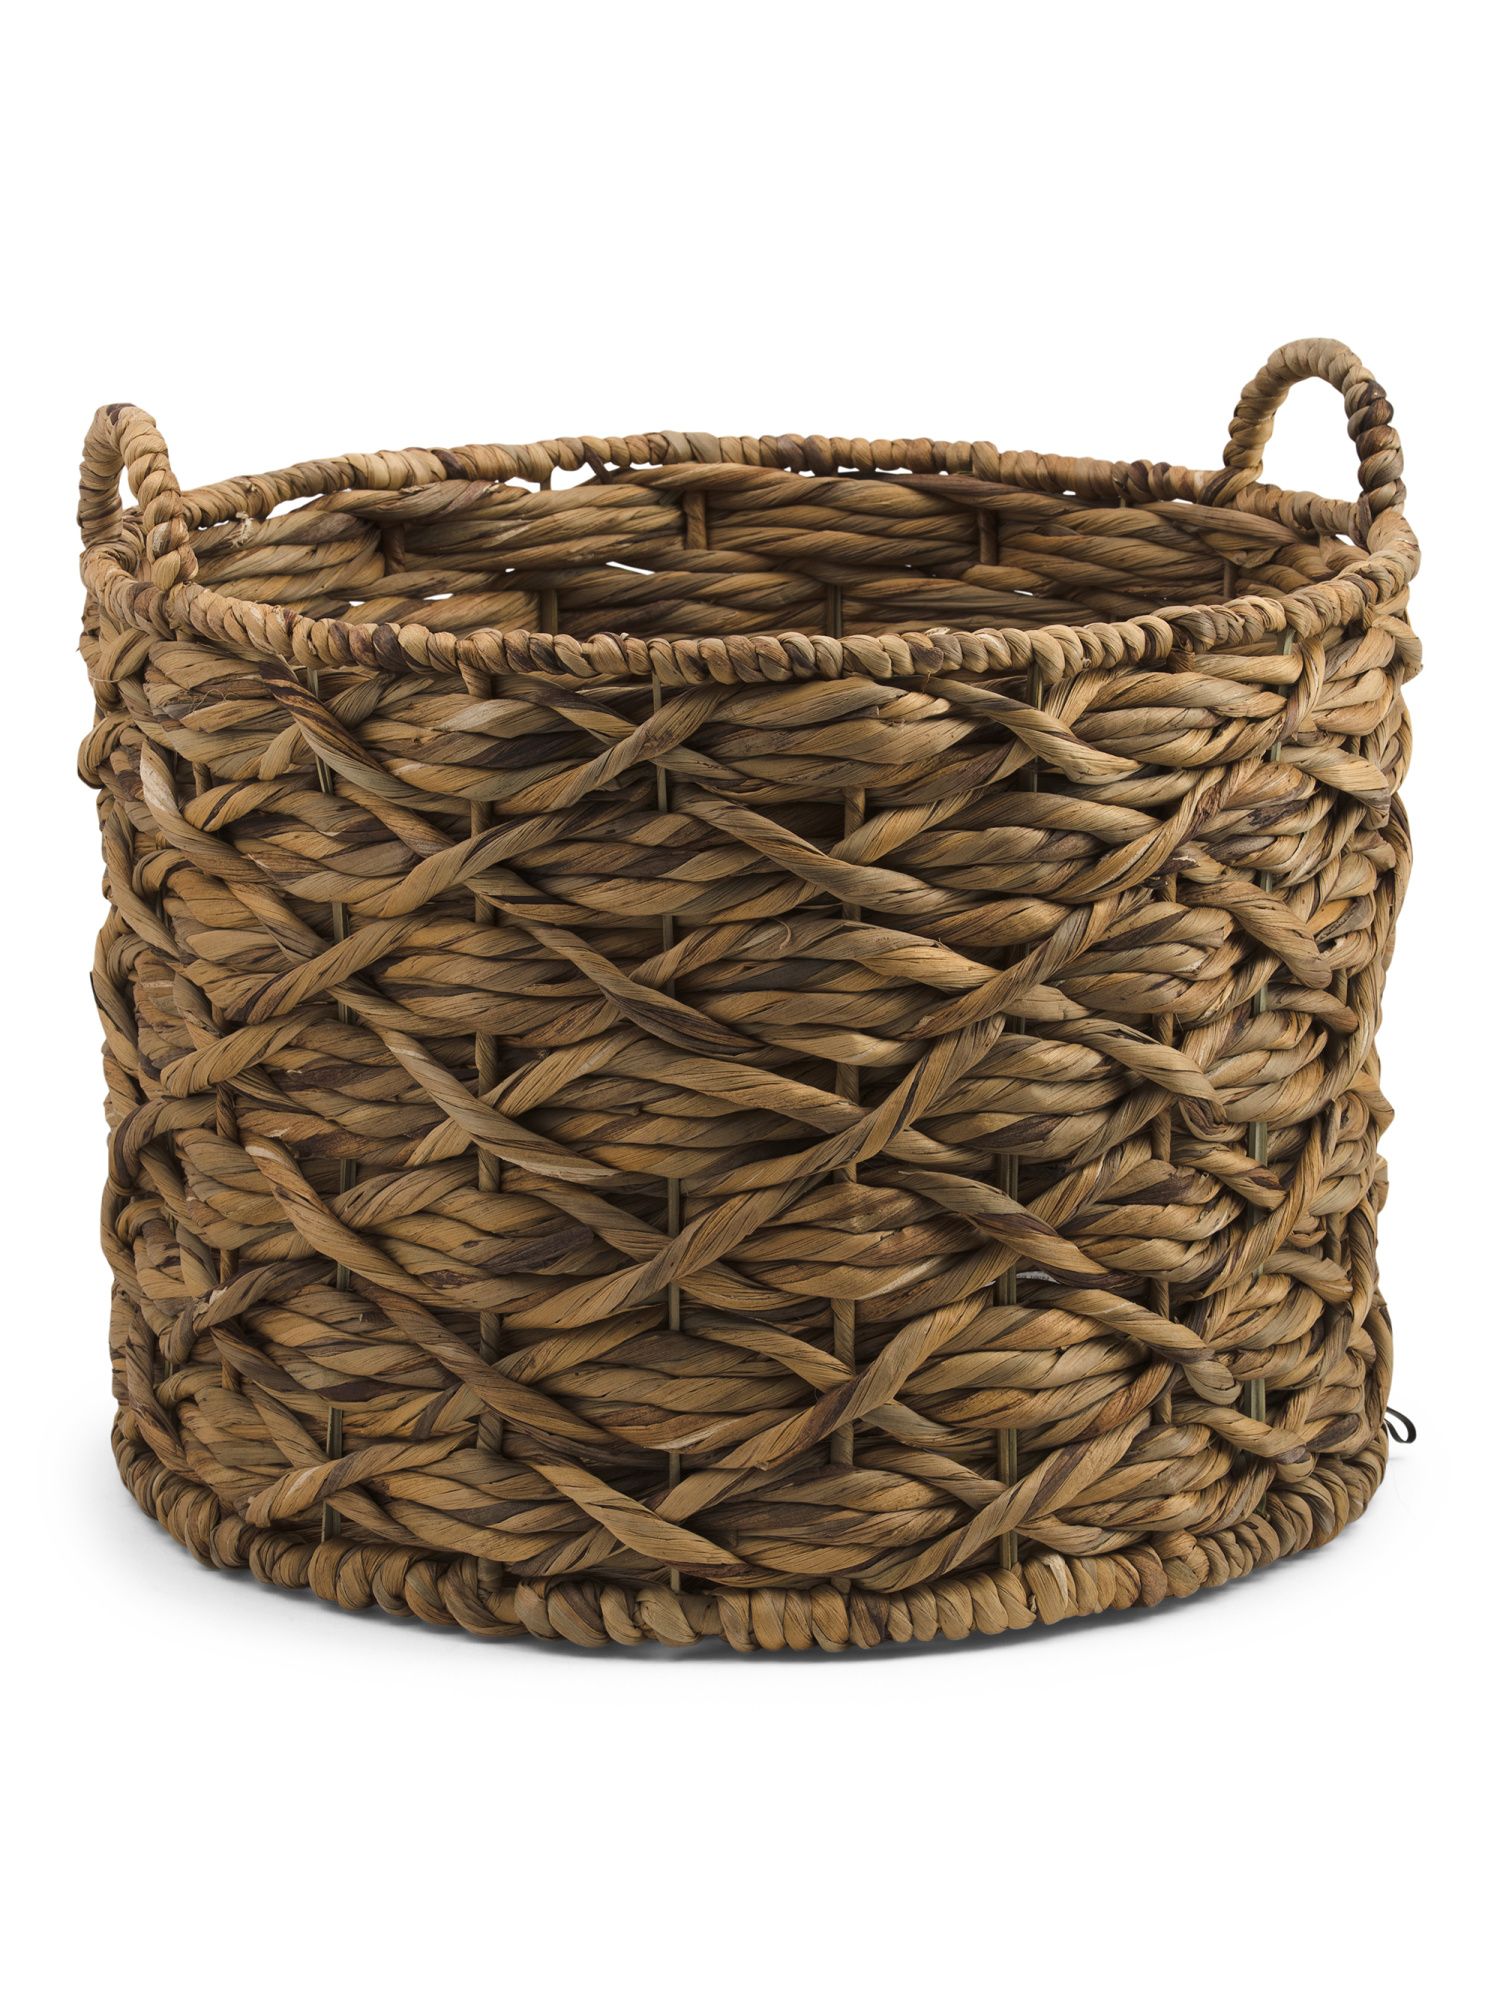 Medium Water Hyacinth Round Basket | TJ Maxx